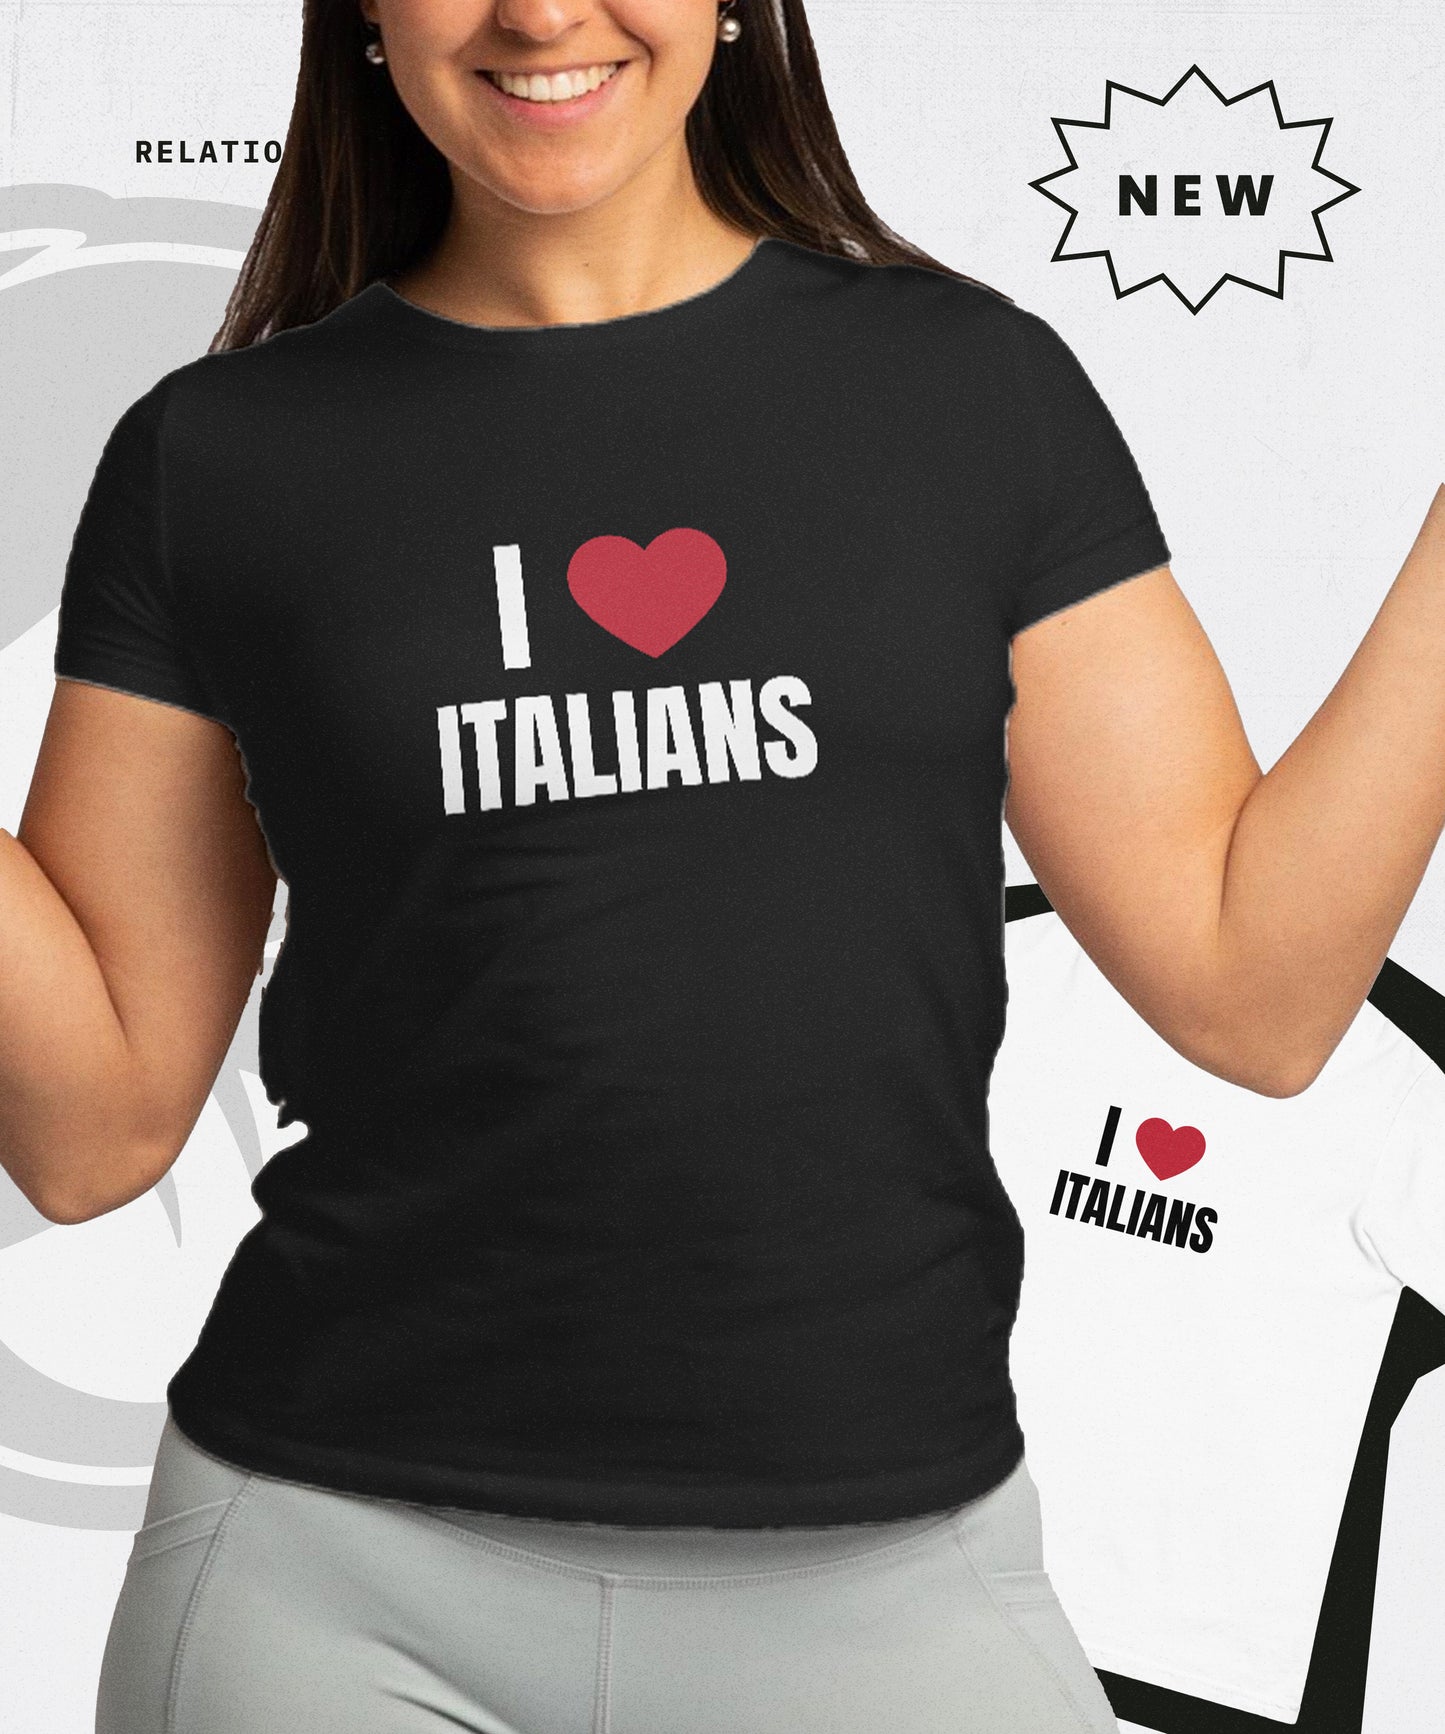 I ❤️ Italians T-shirt